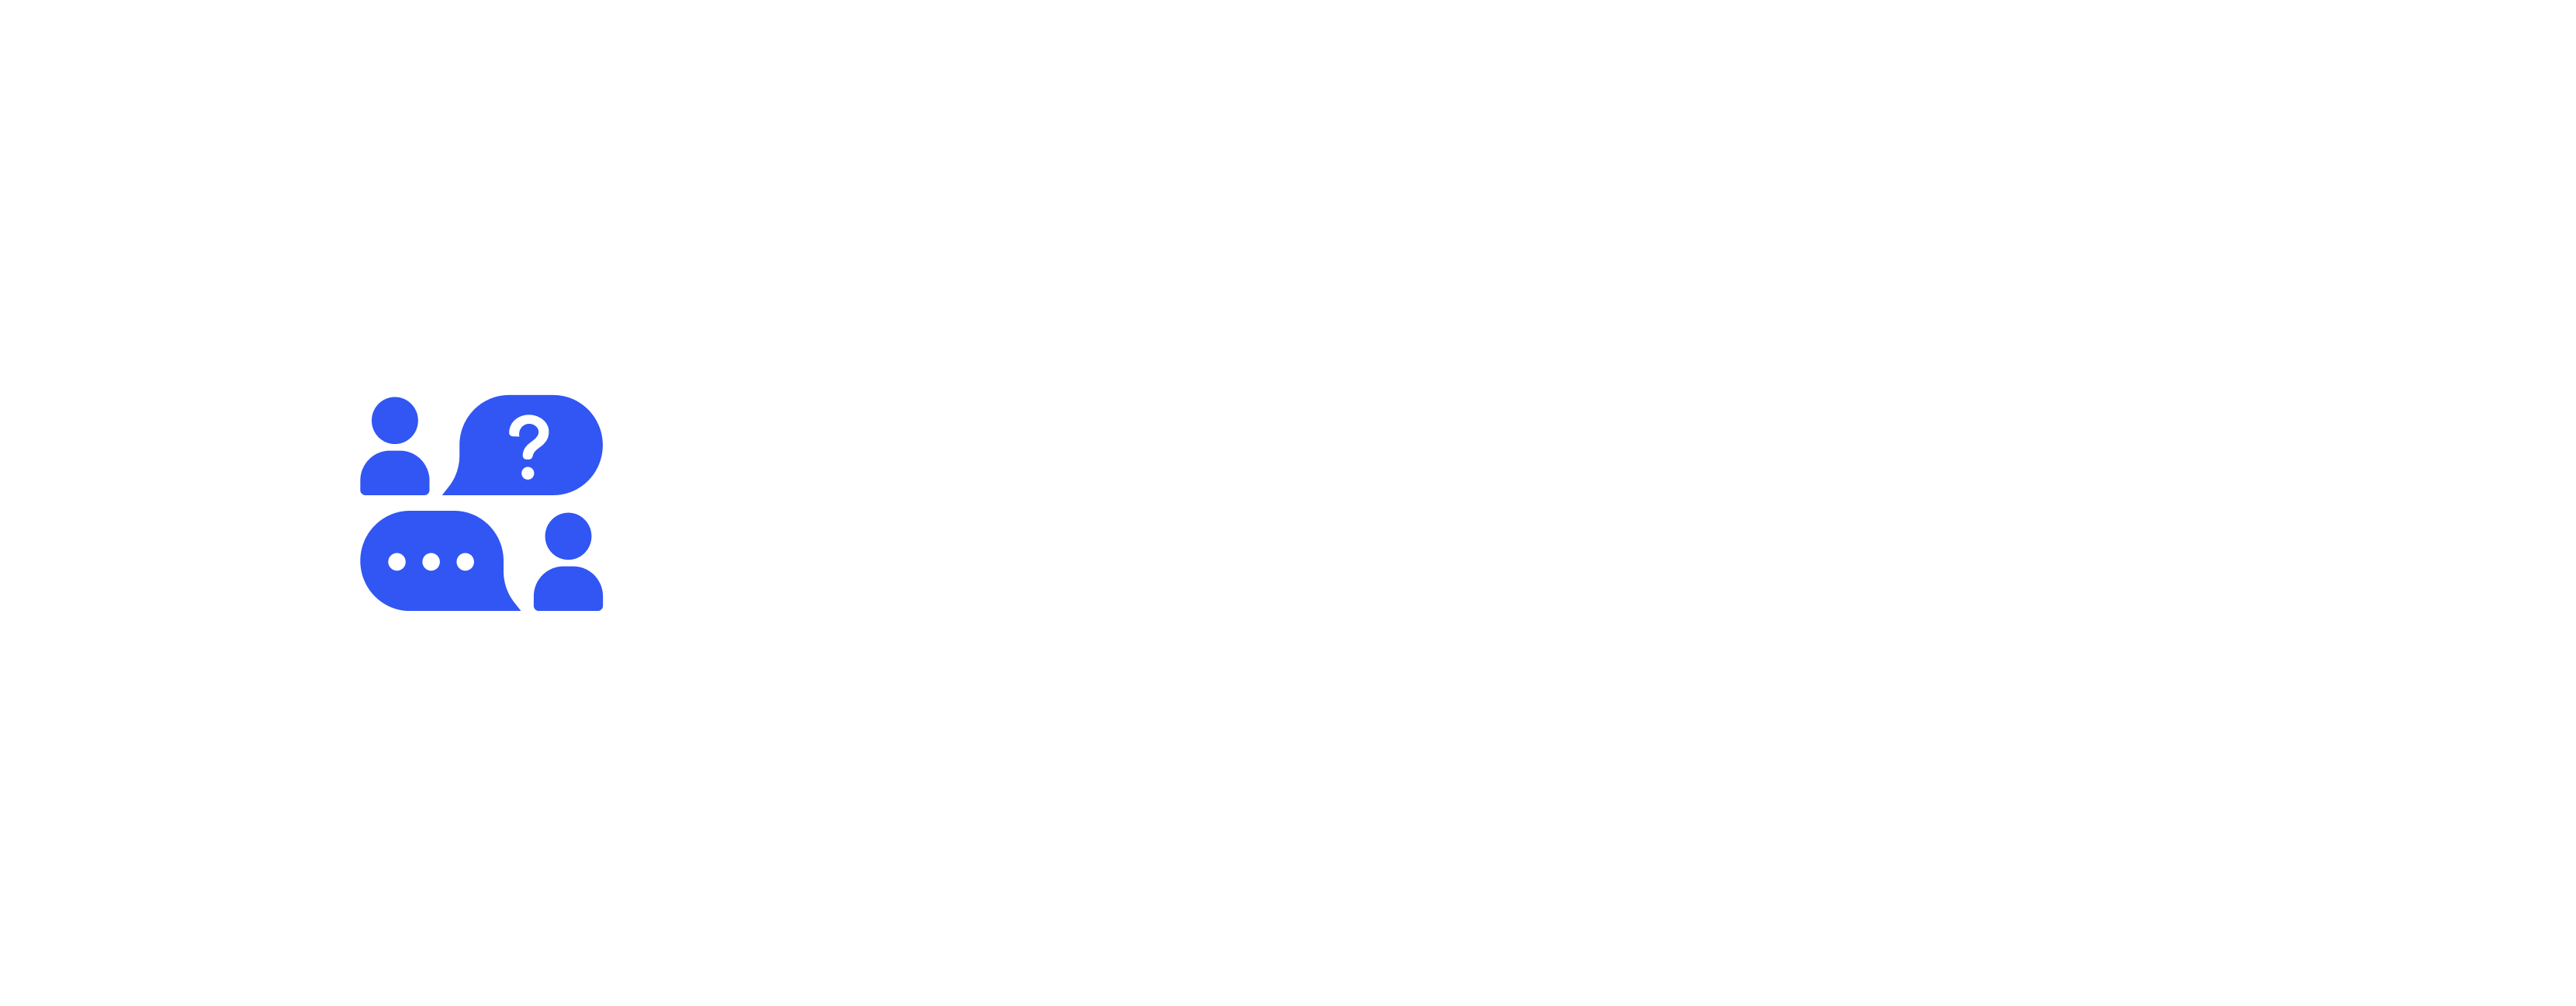 AuditTalk: Forecasting the Future of Audit